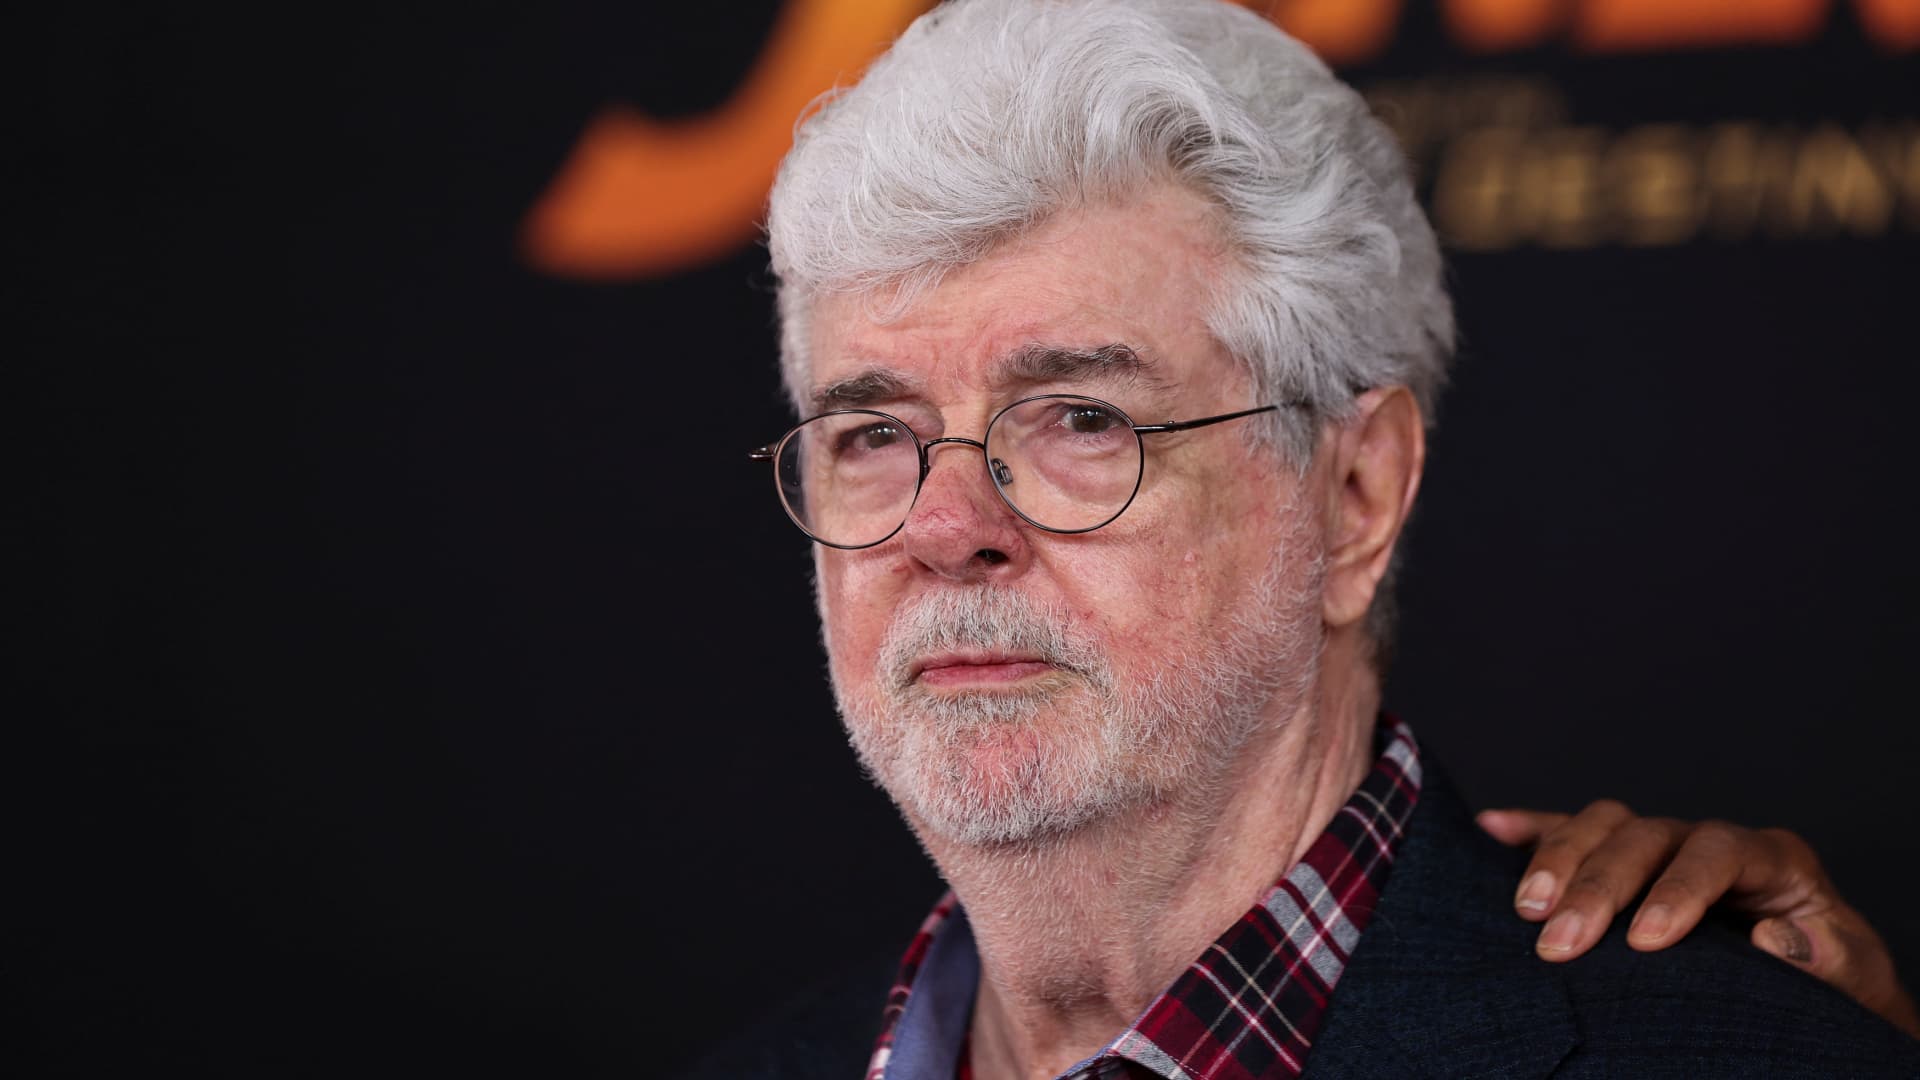 George Lucas backs Disney CEO Bob Iger in Nelson Peltz proxy combat